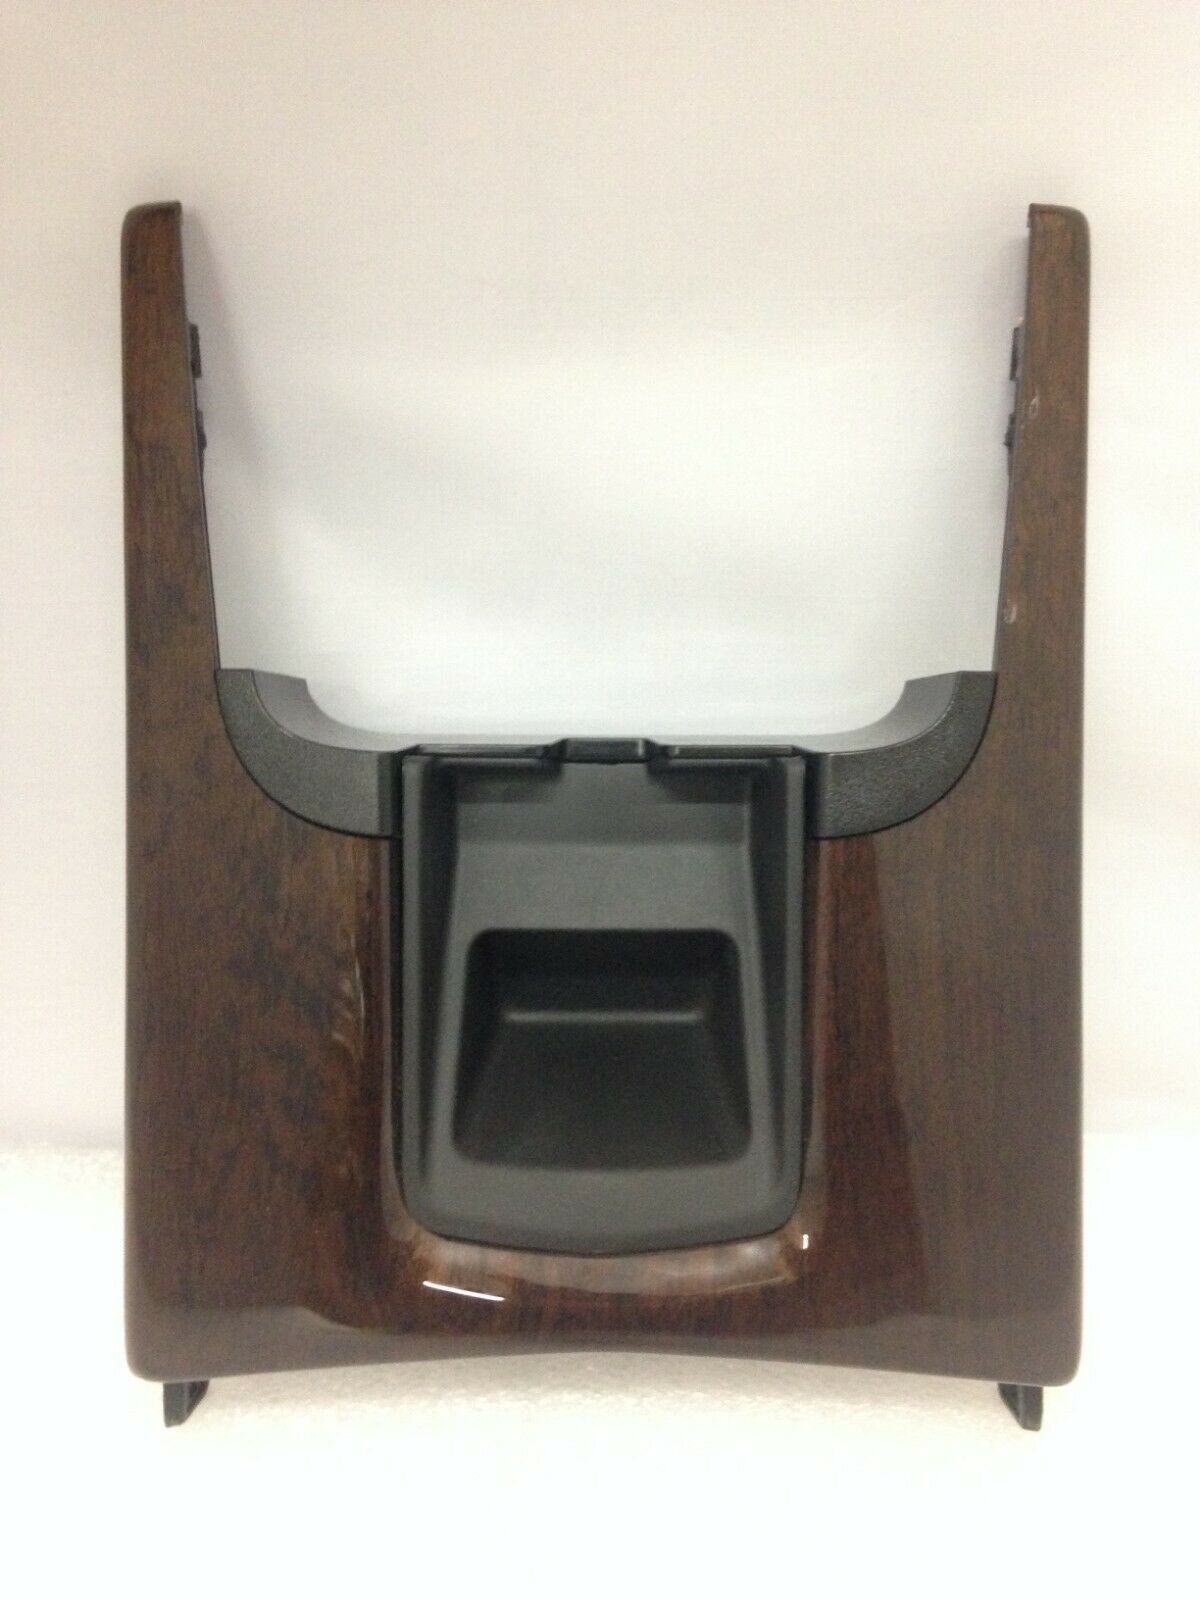 Cadillac XTS 2013+ console woodgrain insert trim piece Brown